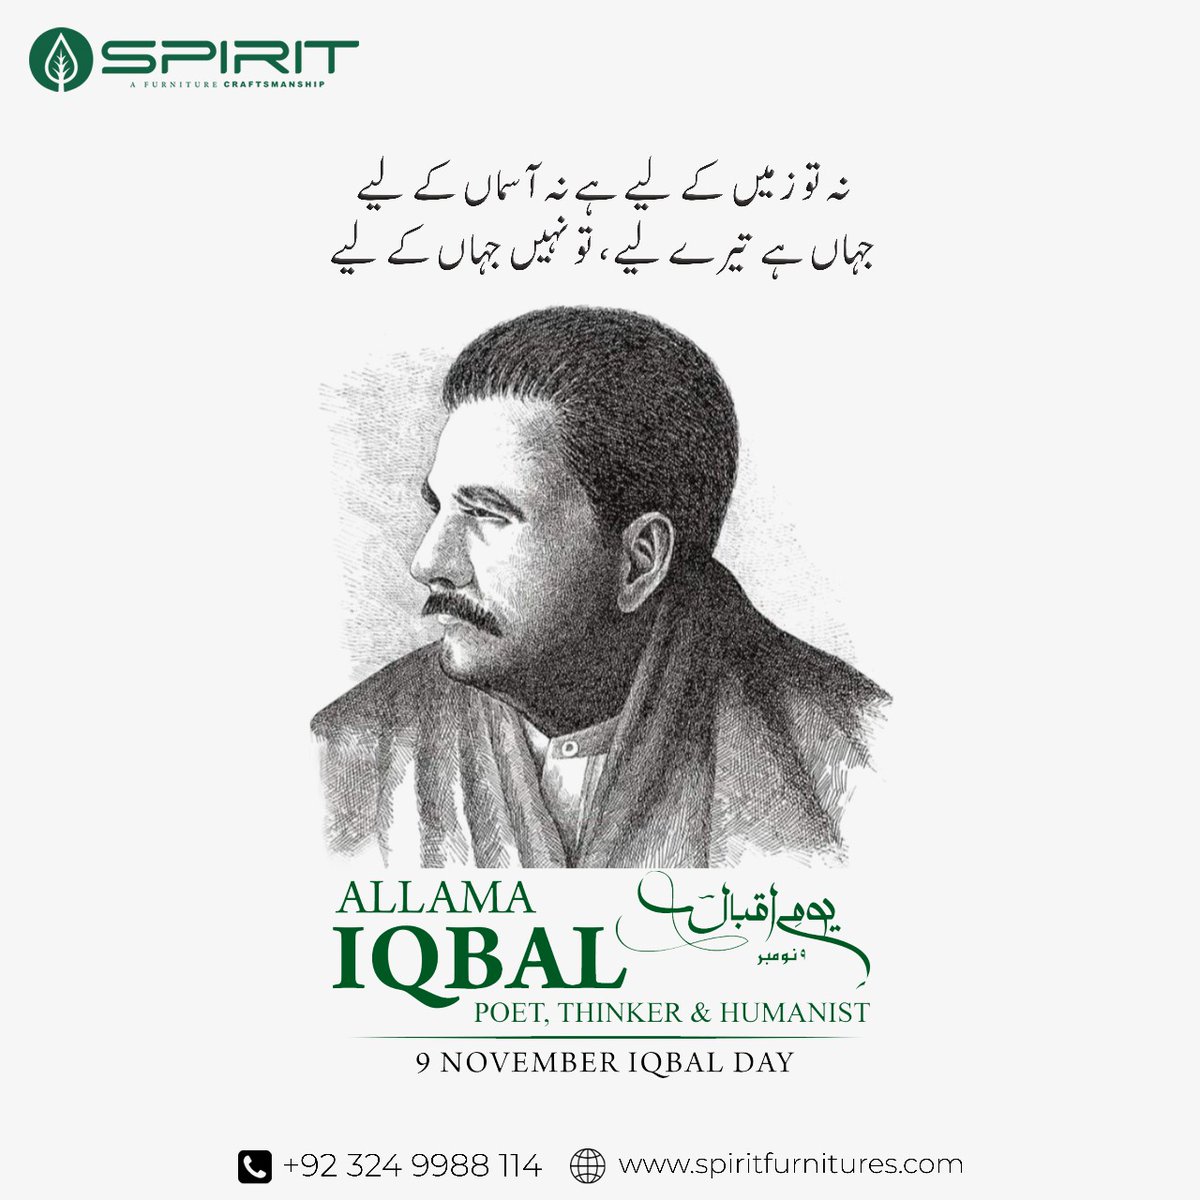 Celebrating the poetic genius and philosopher, Allama Iqbal, on his special day.
#AllamaIqbalDay #PhilosopherPoet #IqbalDay #spiritfurnitures